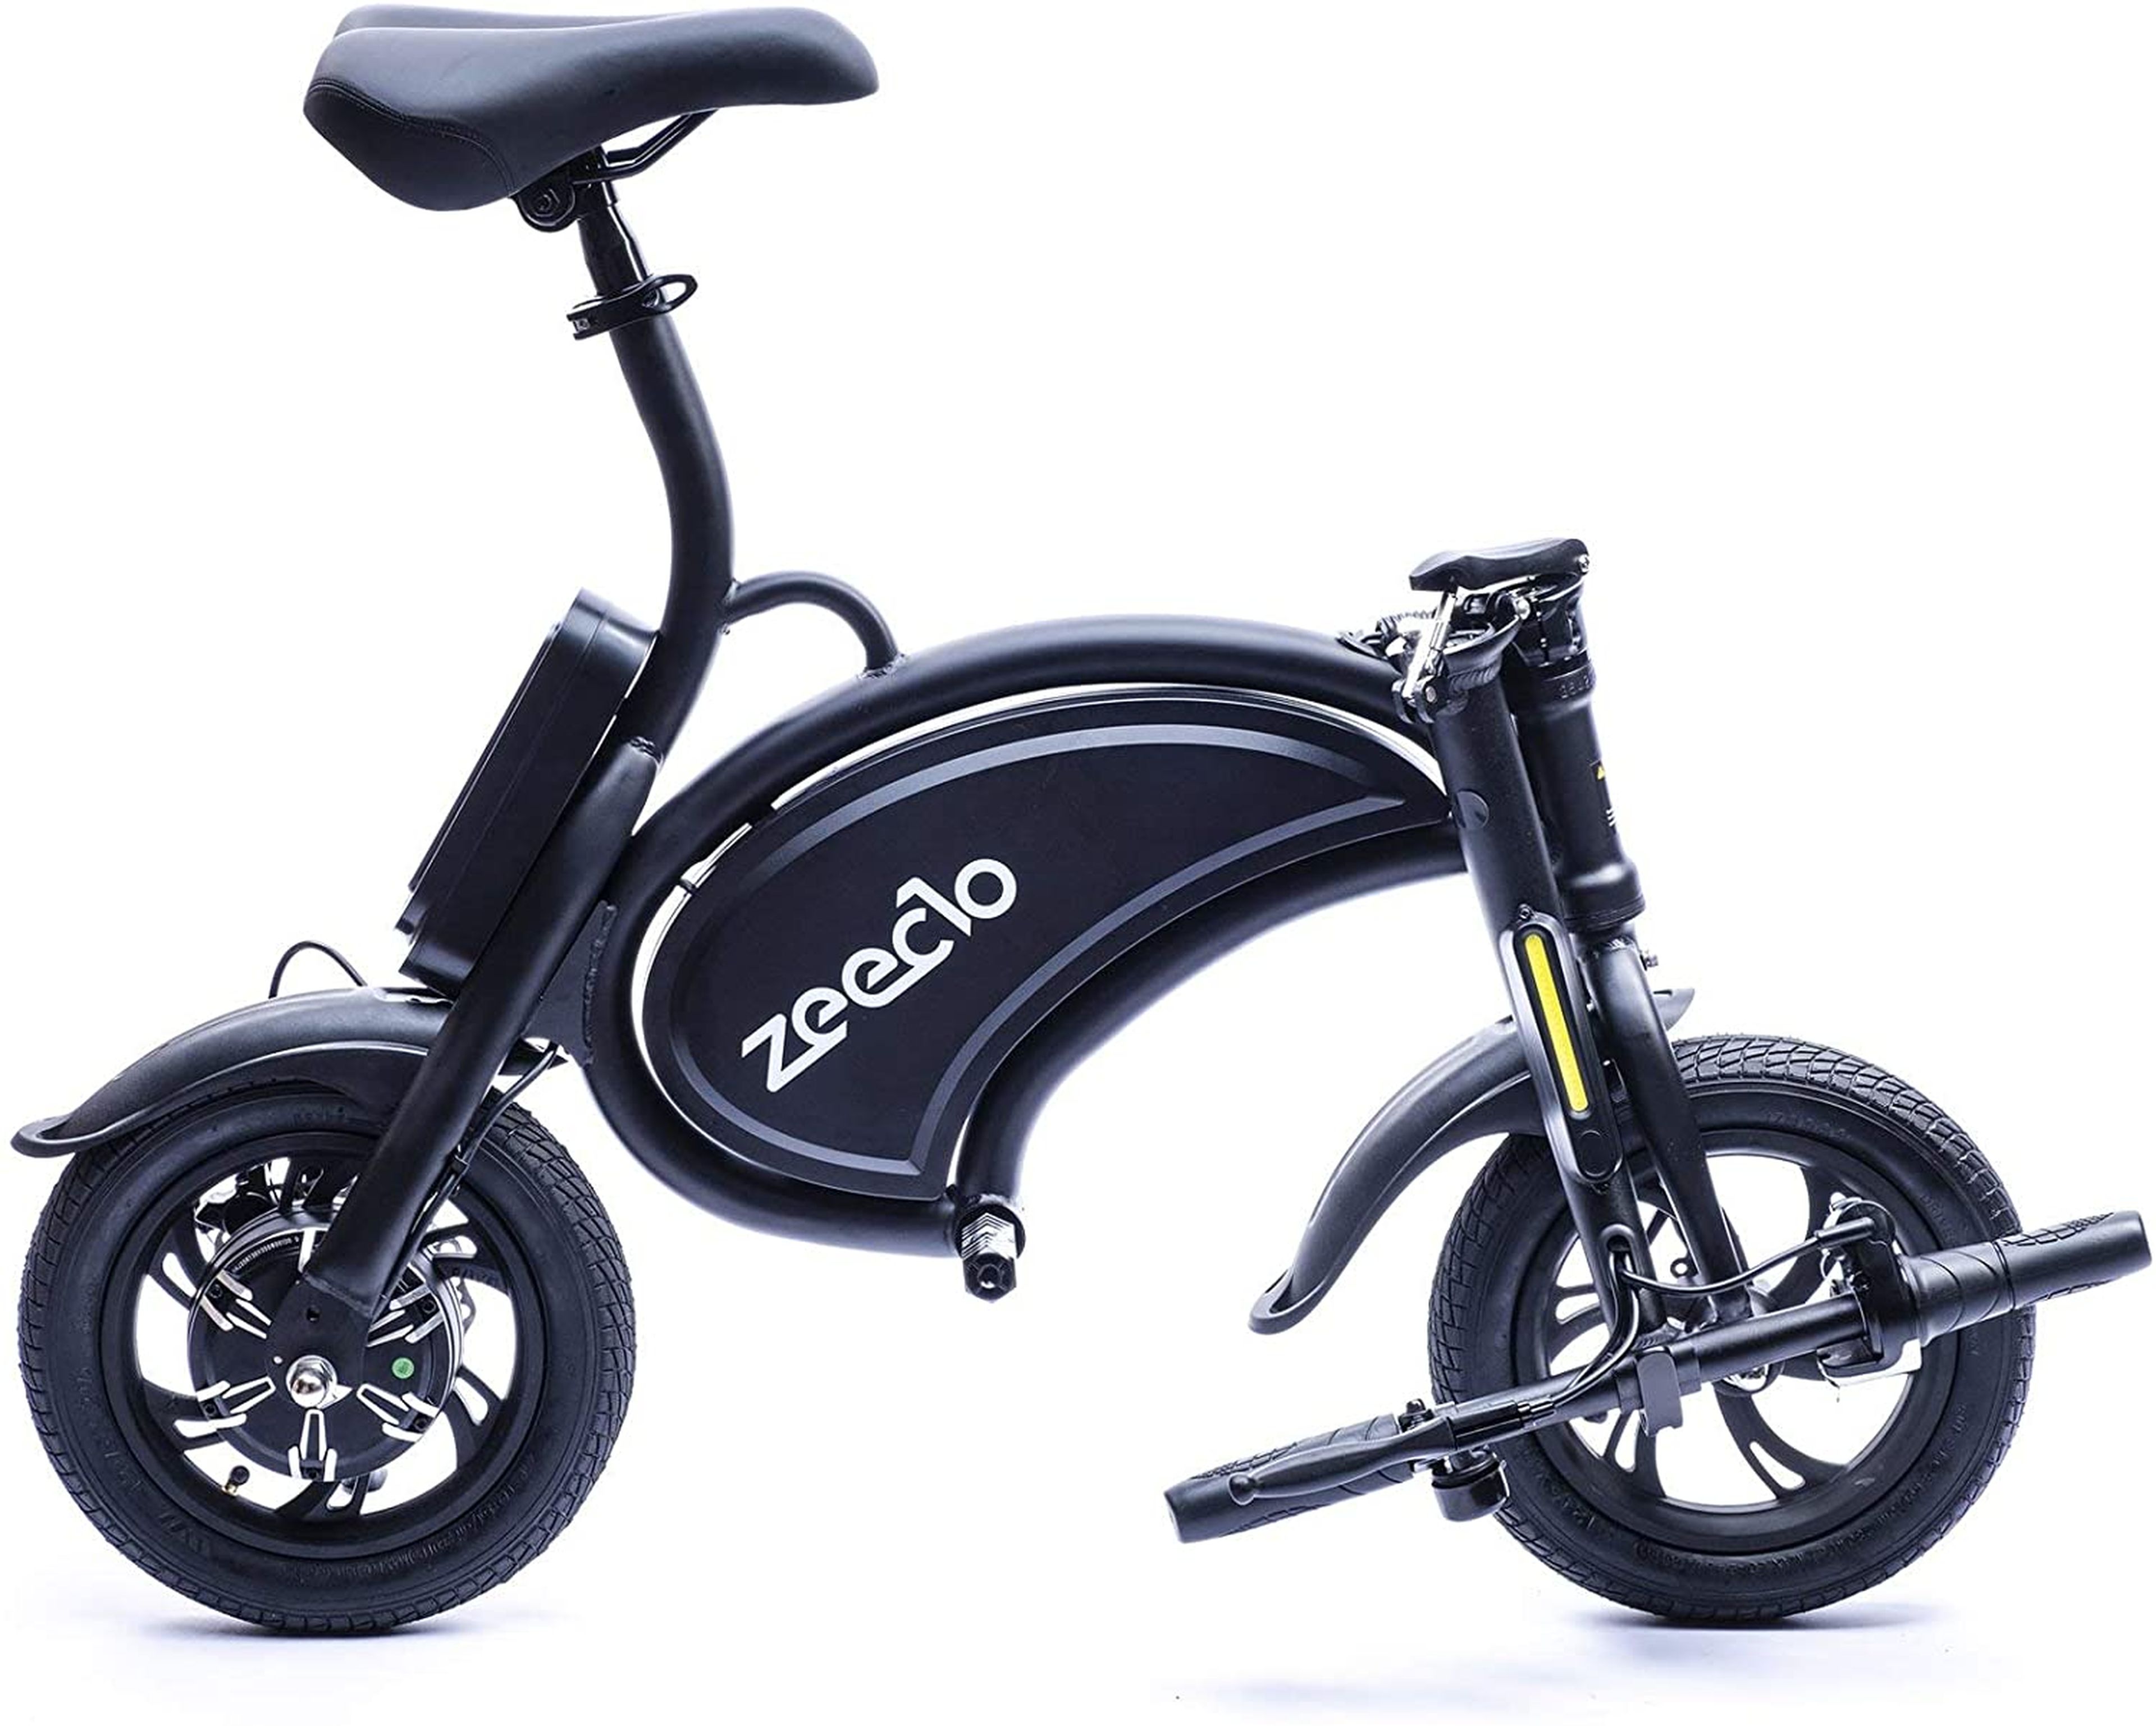 Bicicletas eléctricas baratas 2020